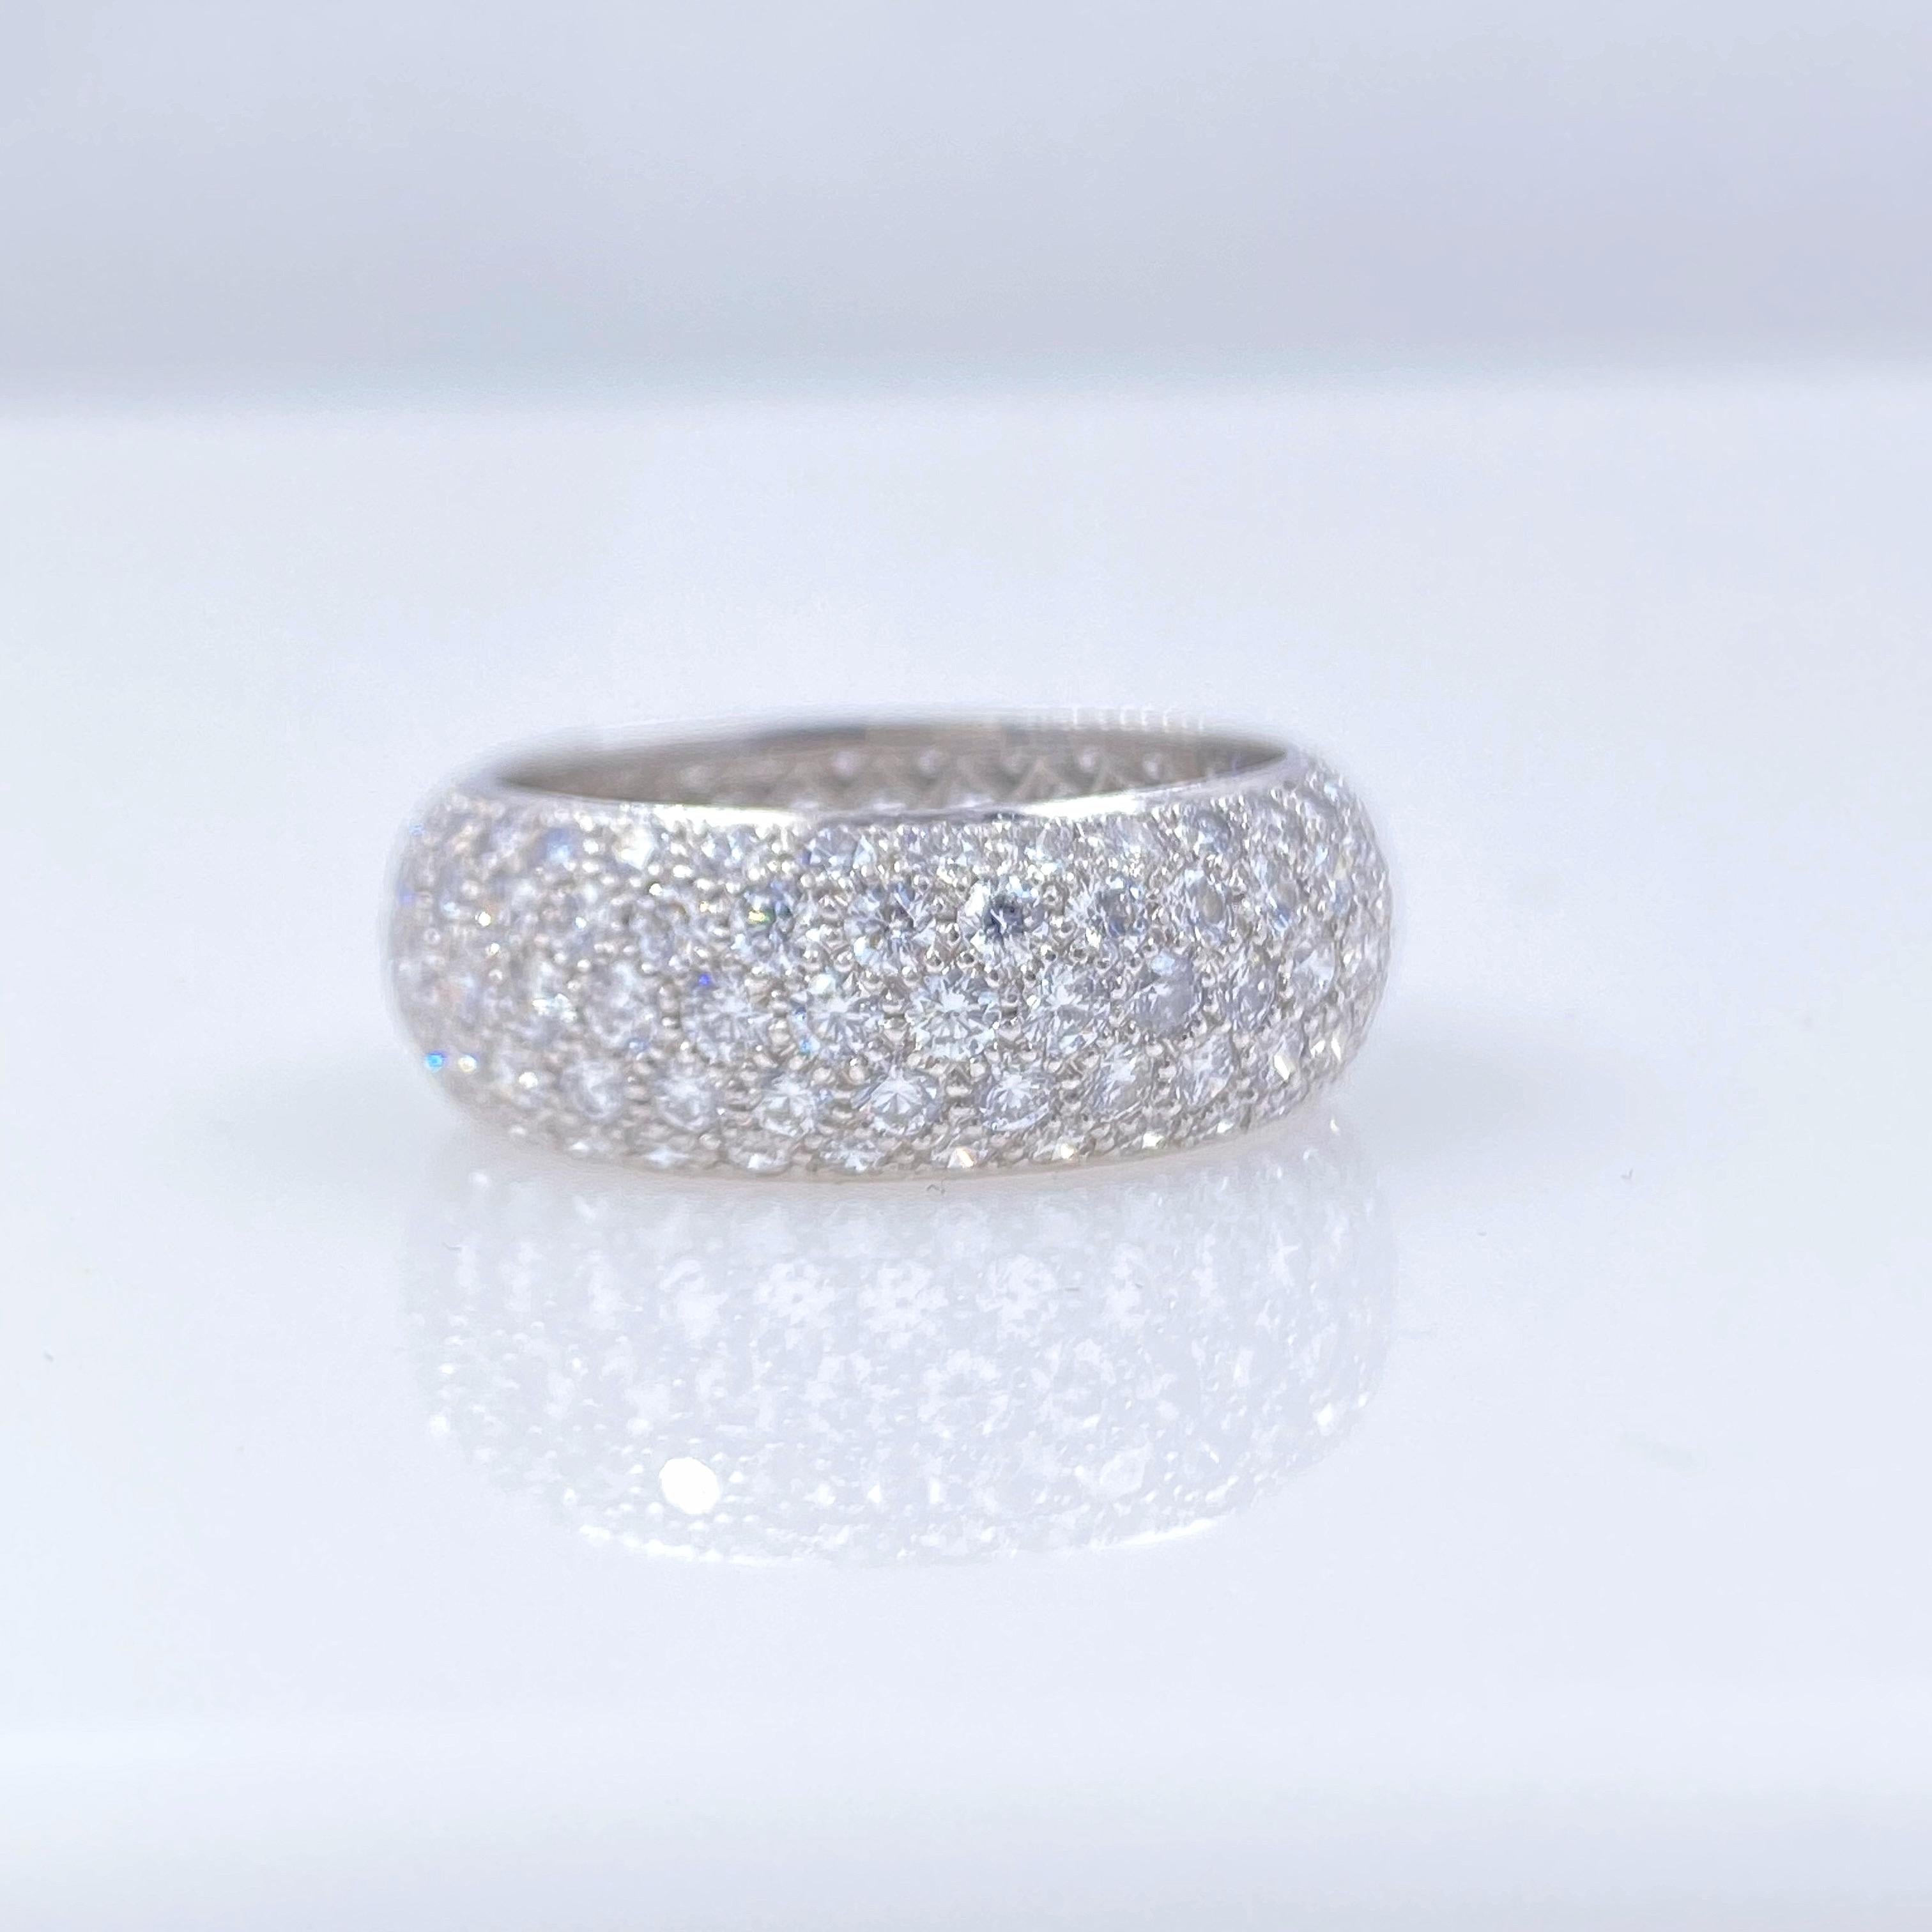 Tiffany & Co Etoile
Style:  Five-Row Diamond Full Circle Band Ring
Metal:  Platinum
Size:  8
Width:  10 MM
TCW:  3.75 tcw
Main Diamond:  Round Brilliant Cut Diamonds
Color & Clarity:  F - G / VVS2 - VS1
Hallmark:  PT950 ©TIFFANY&CO.
Includes:  T&C